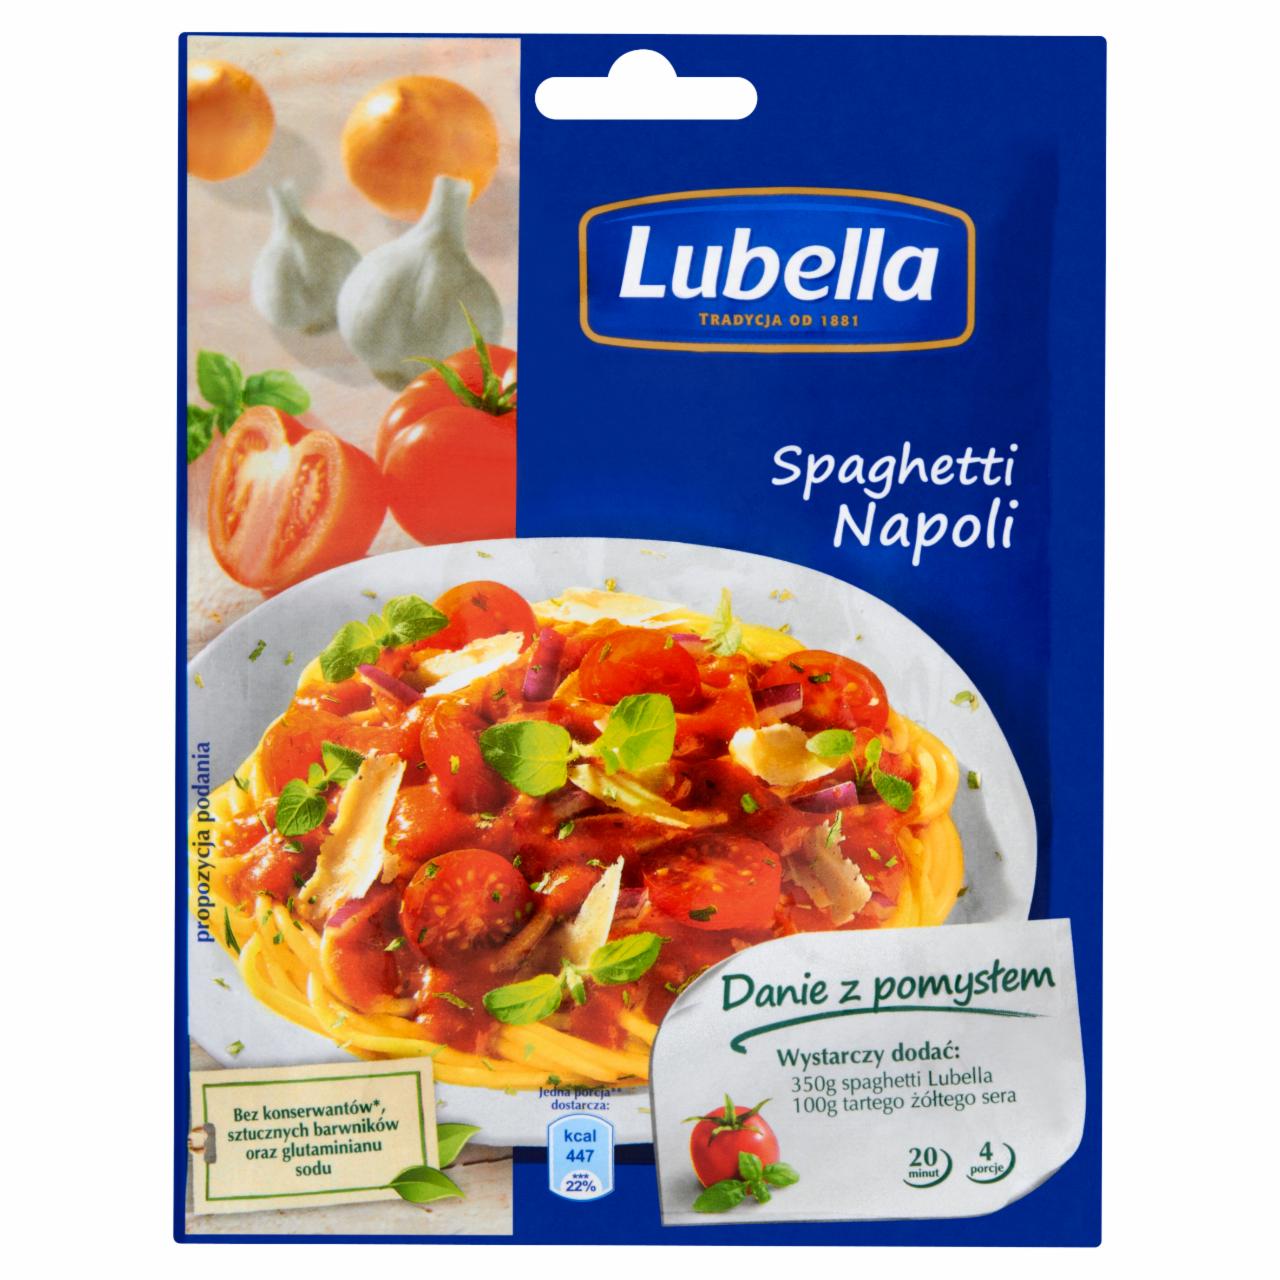 Zdjęcia - Lubella Danie z pomysłem Spaghetti Napoli 45 g